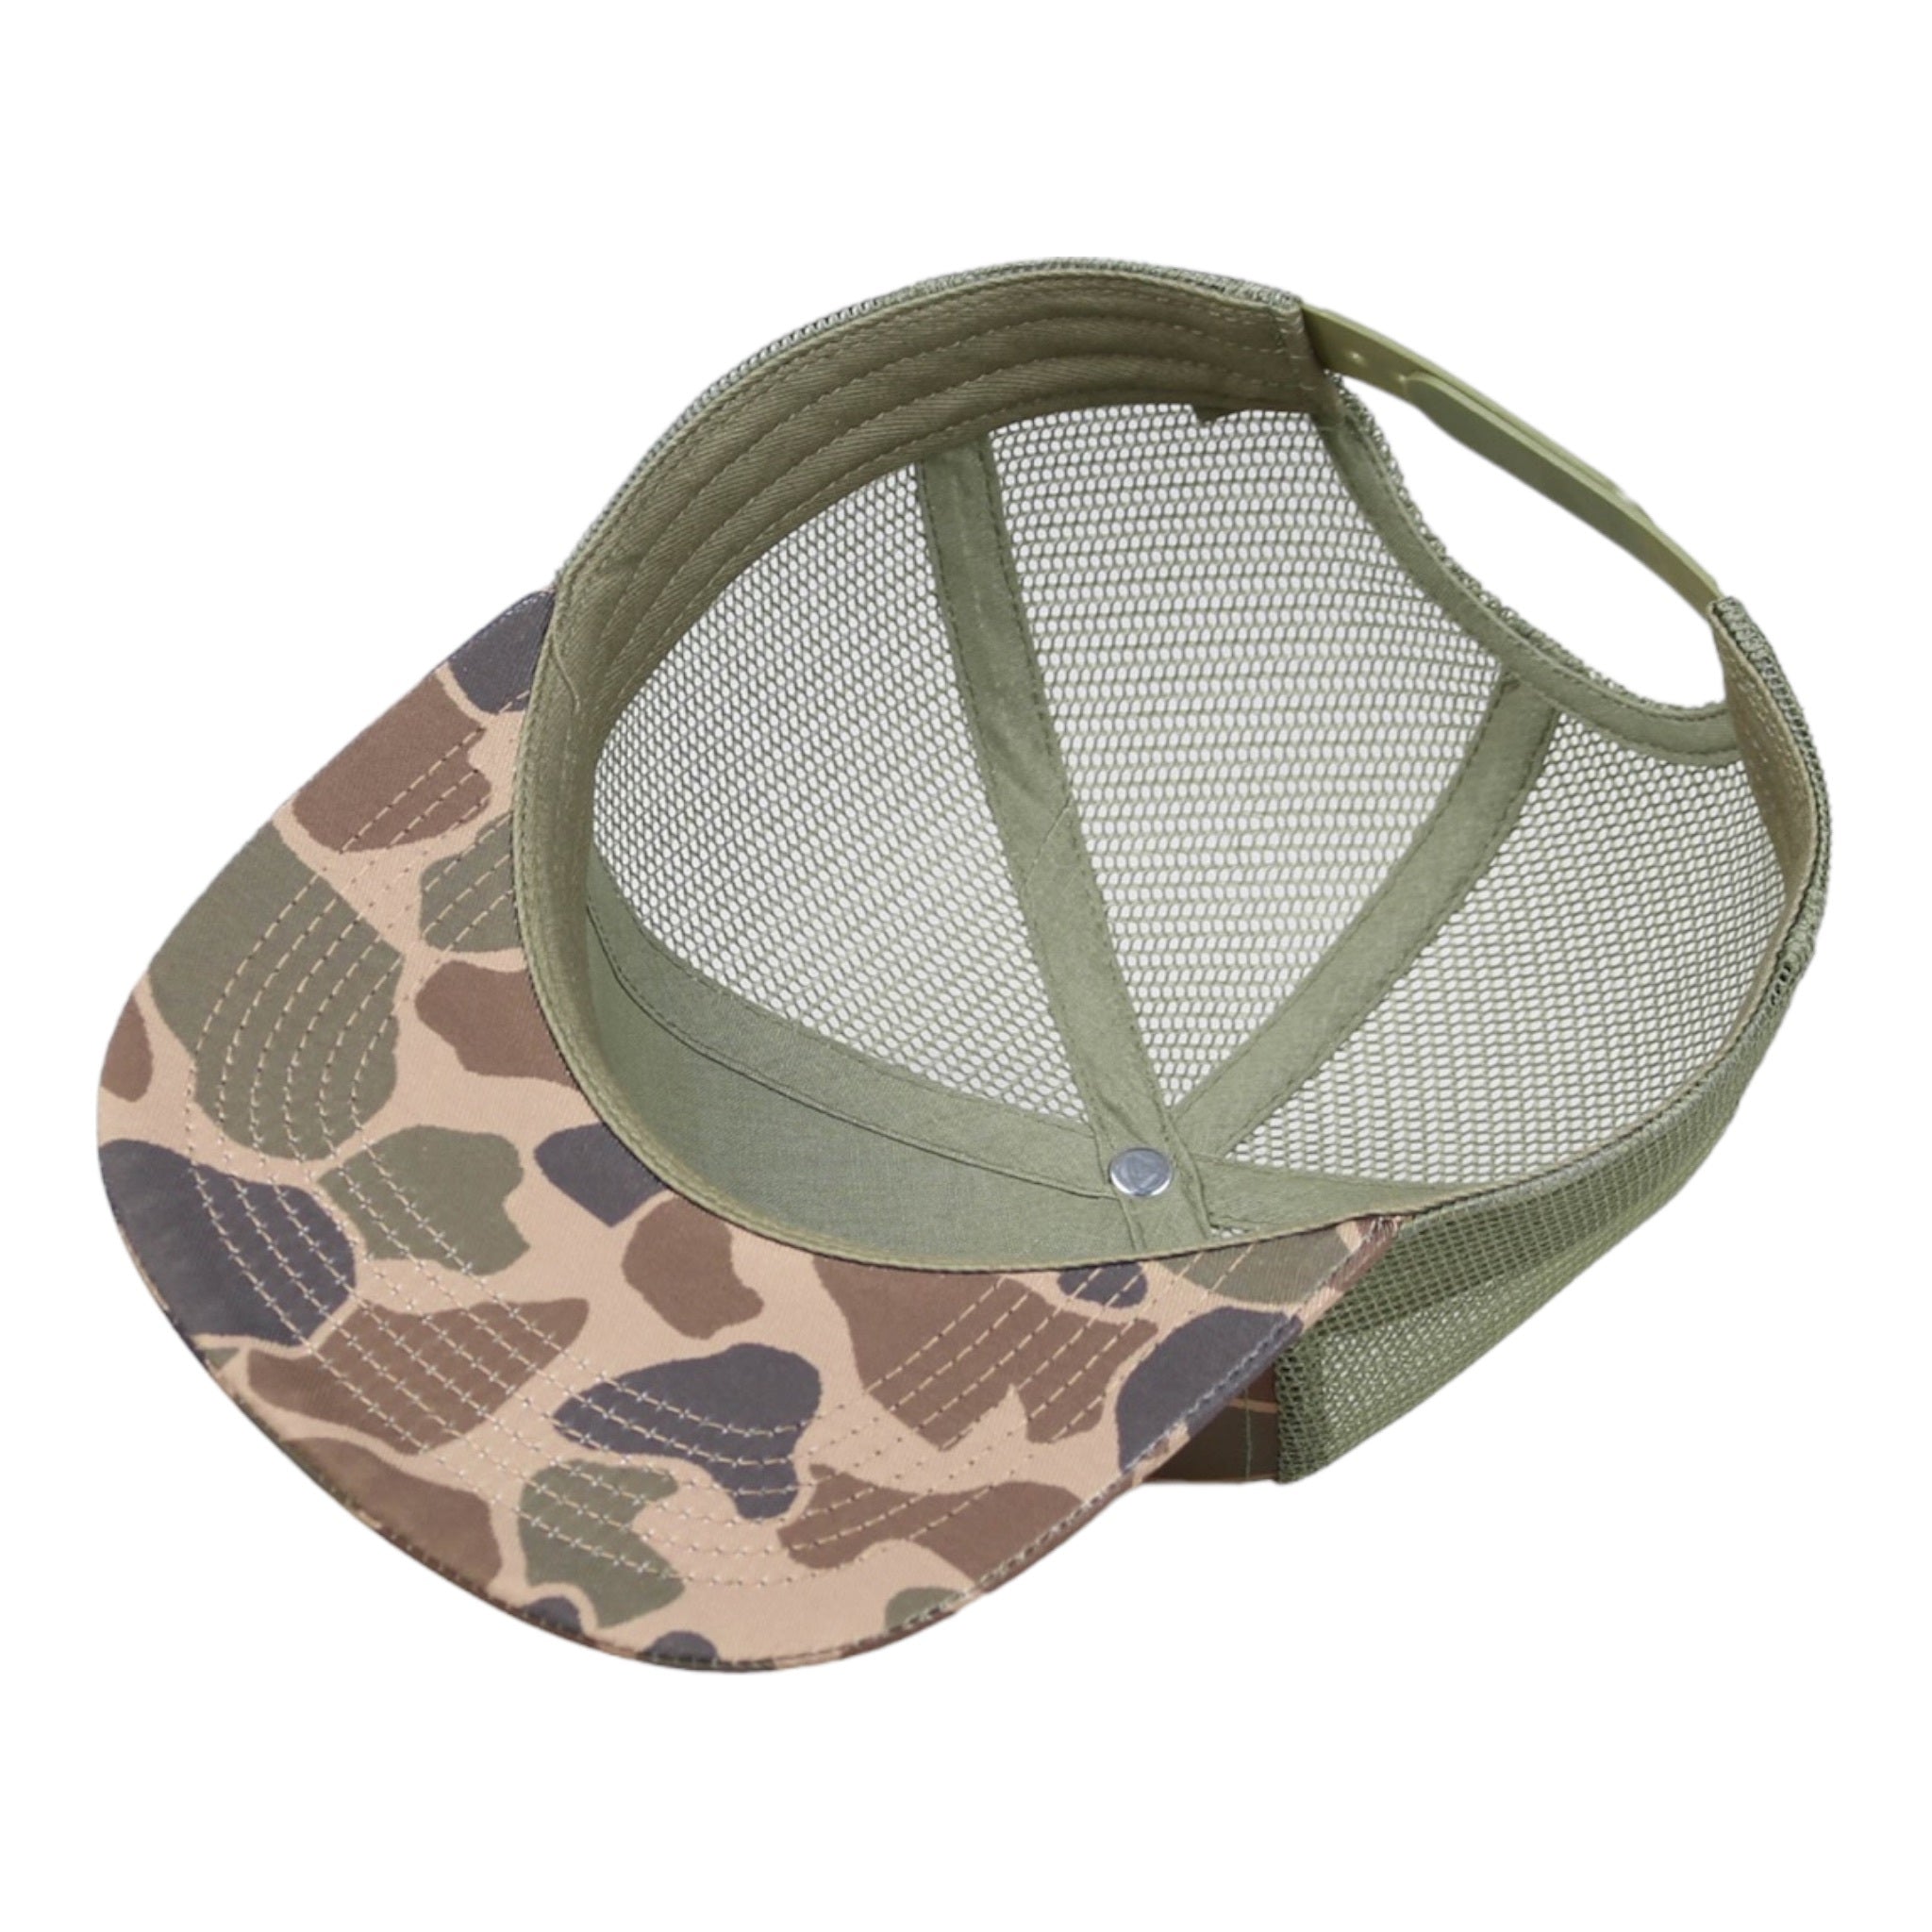 A Fowl Follower Favorite Camo Hat with a mesh visor.